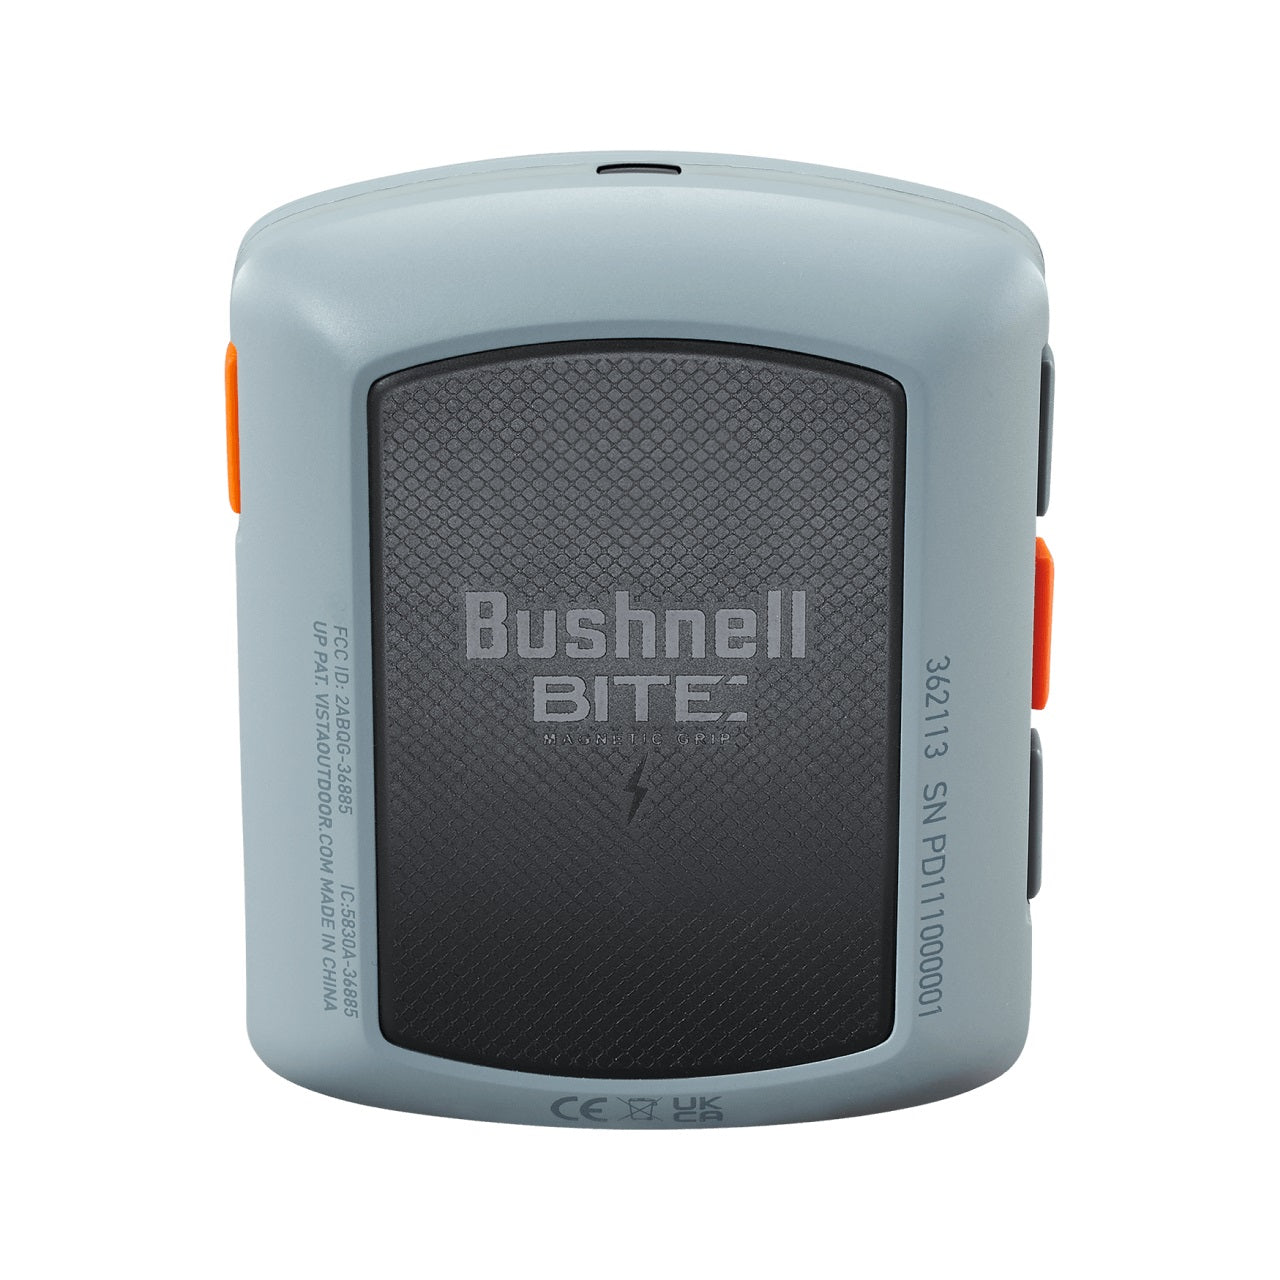 Bushnell Phantom 2 GPS Golf Rangefinder